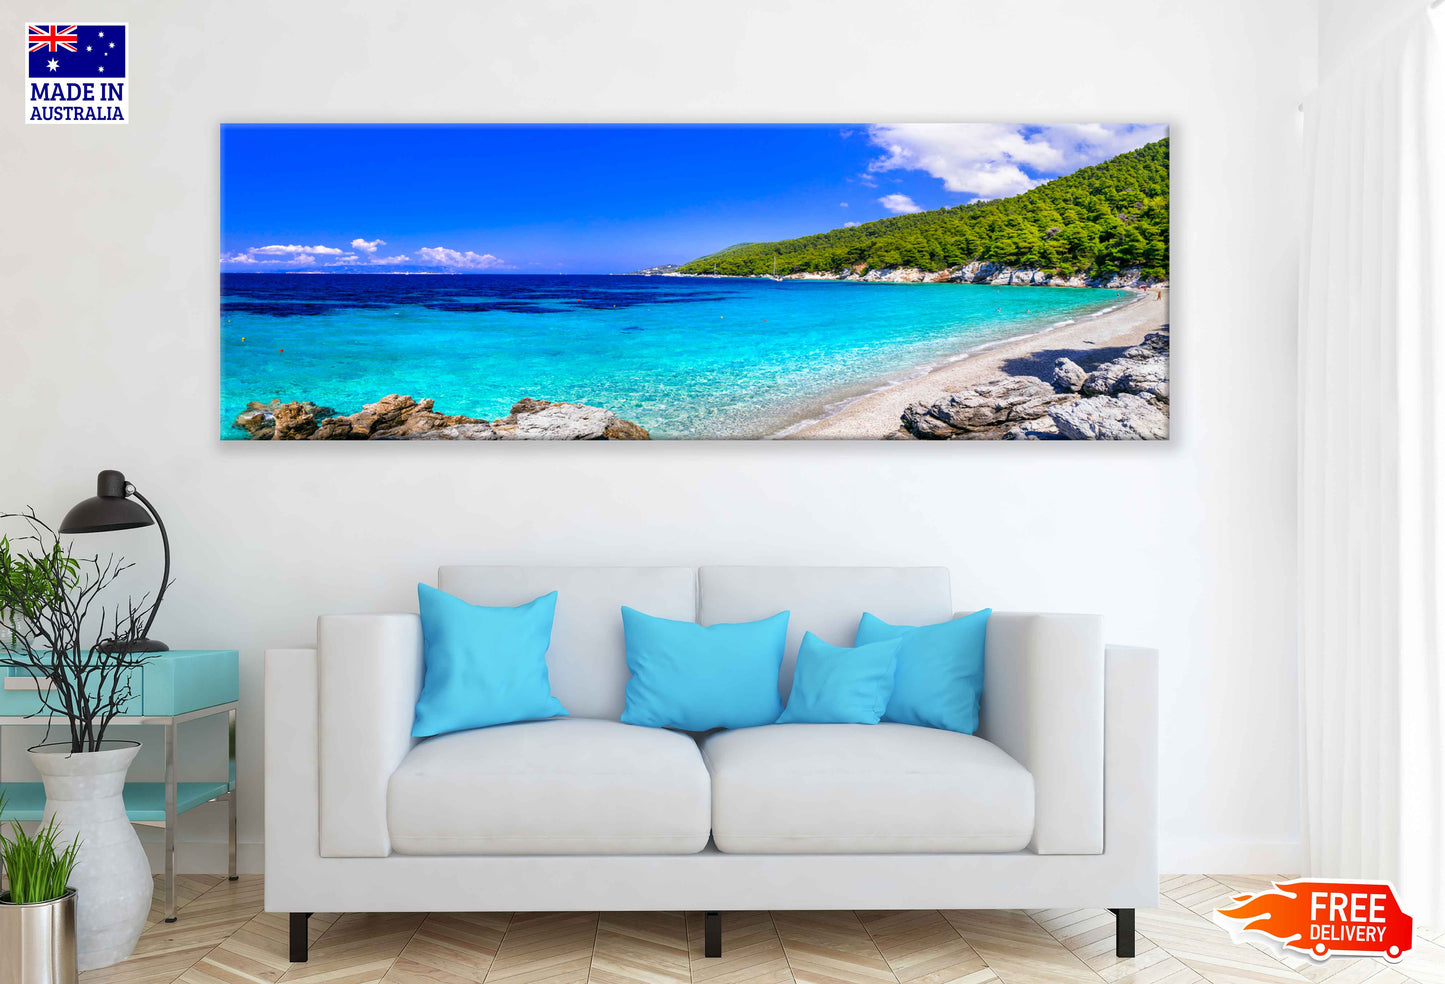 Panoramic Canvas Skopelos Island Sea View Photographin High Quality 100% Australian Made Wall Canvas Print Ready to Hang